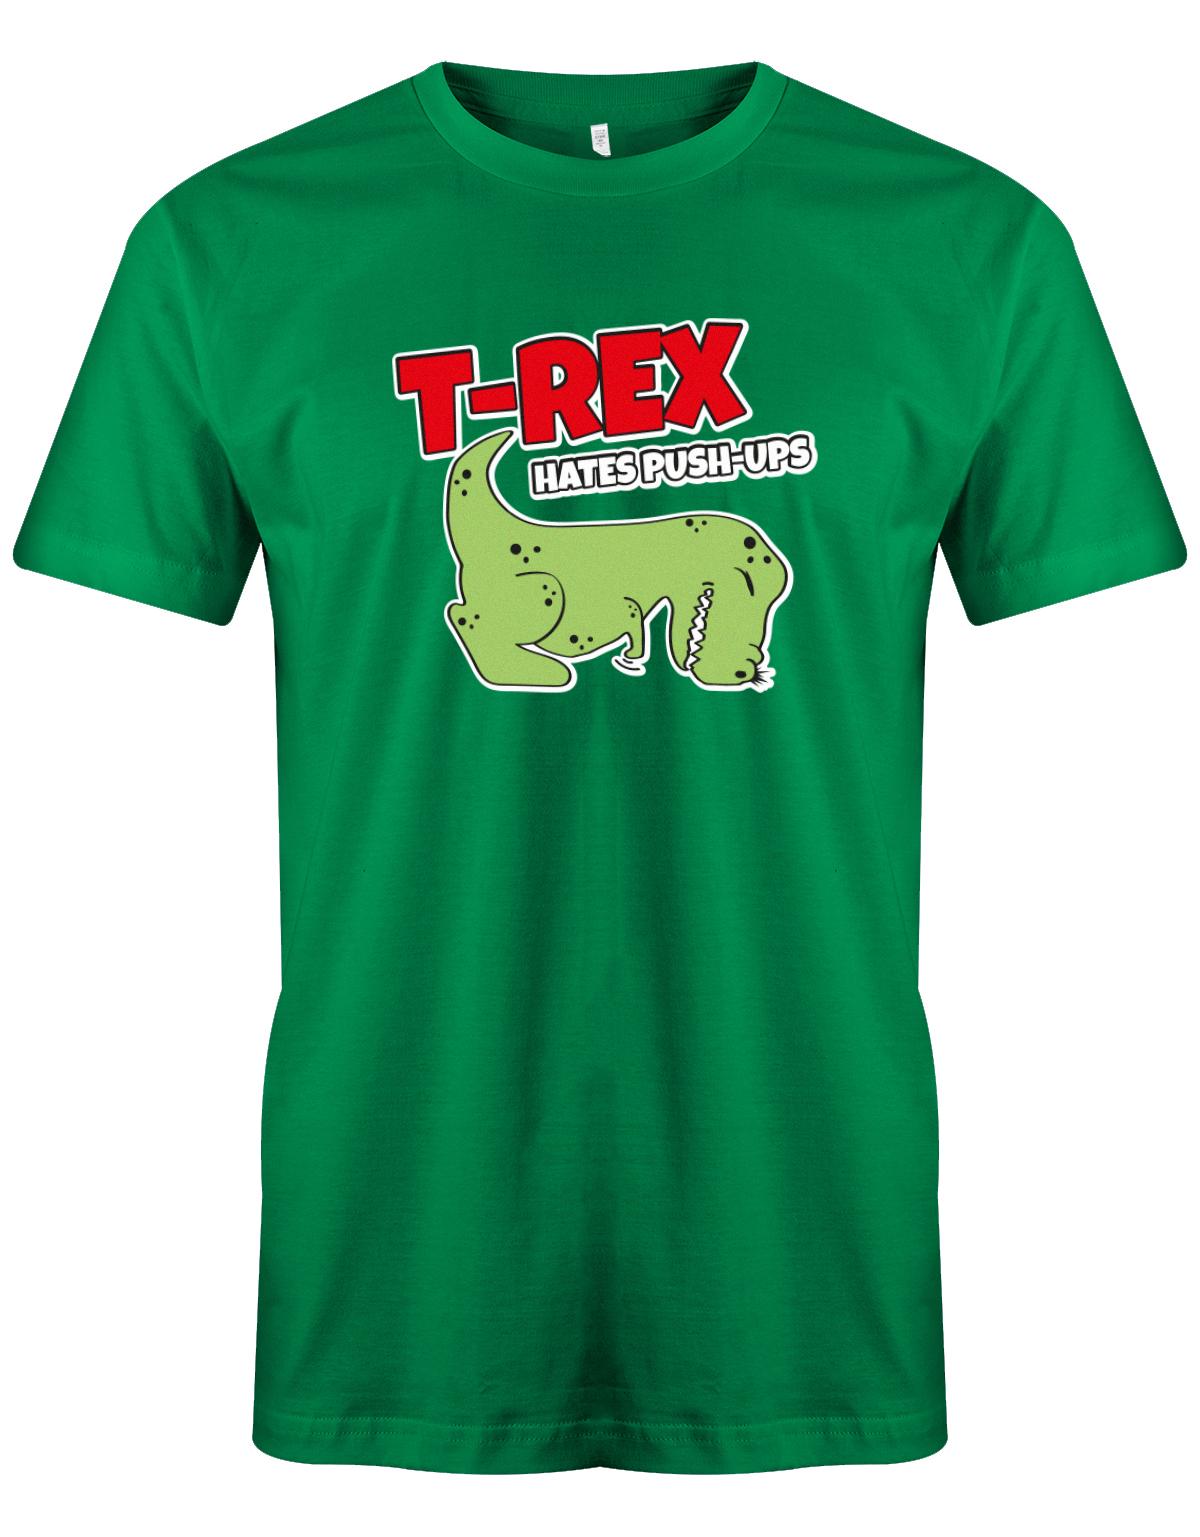 T-Rex-hates-push-ups-herren-SHirt-Gr-n